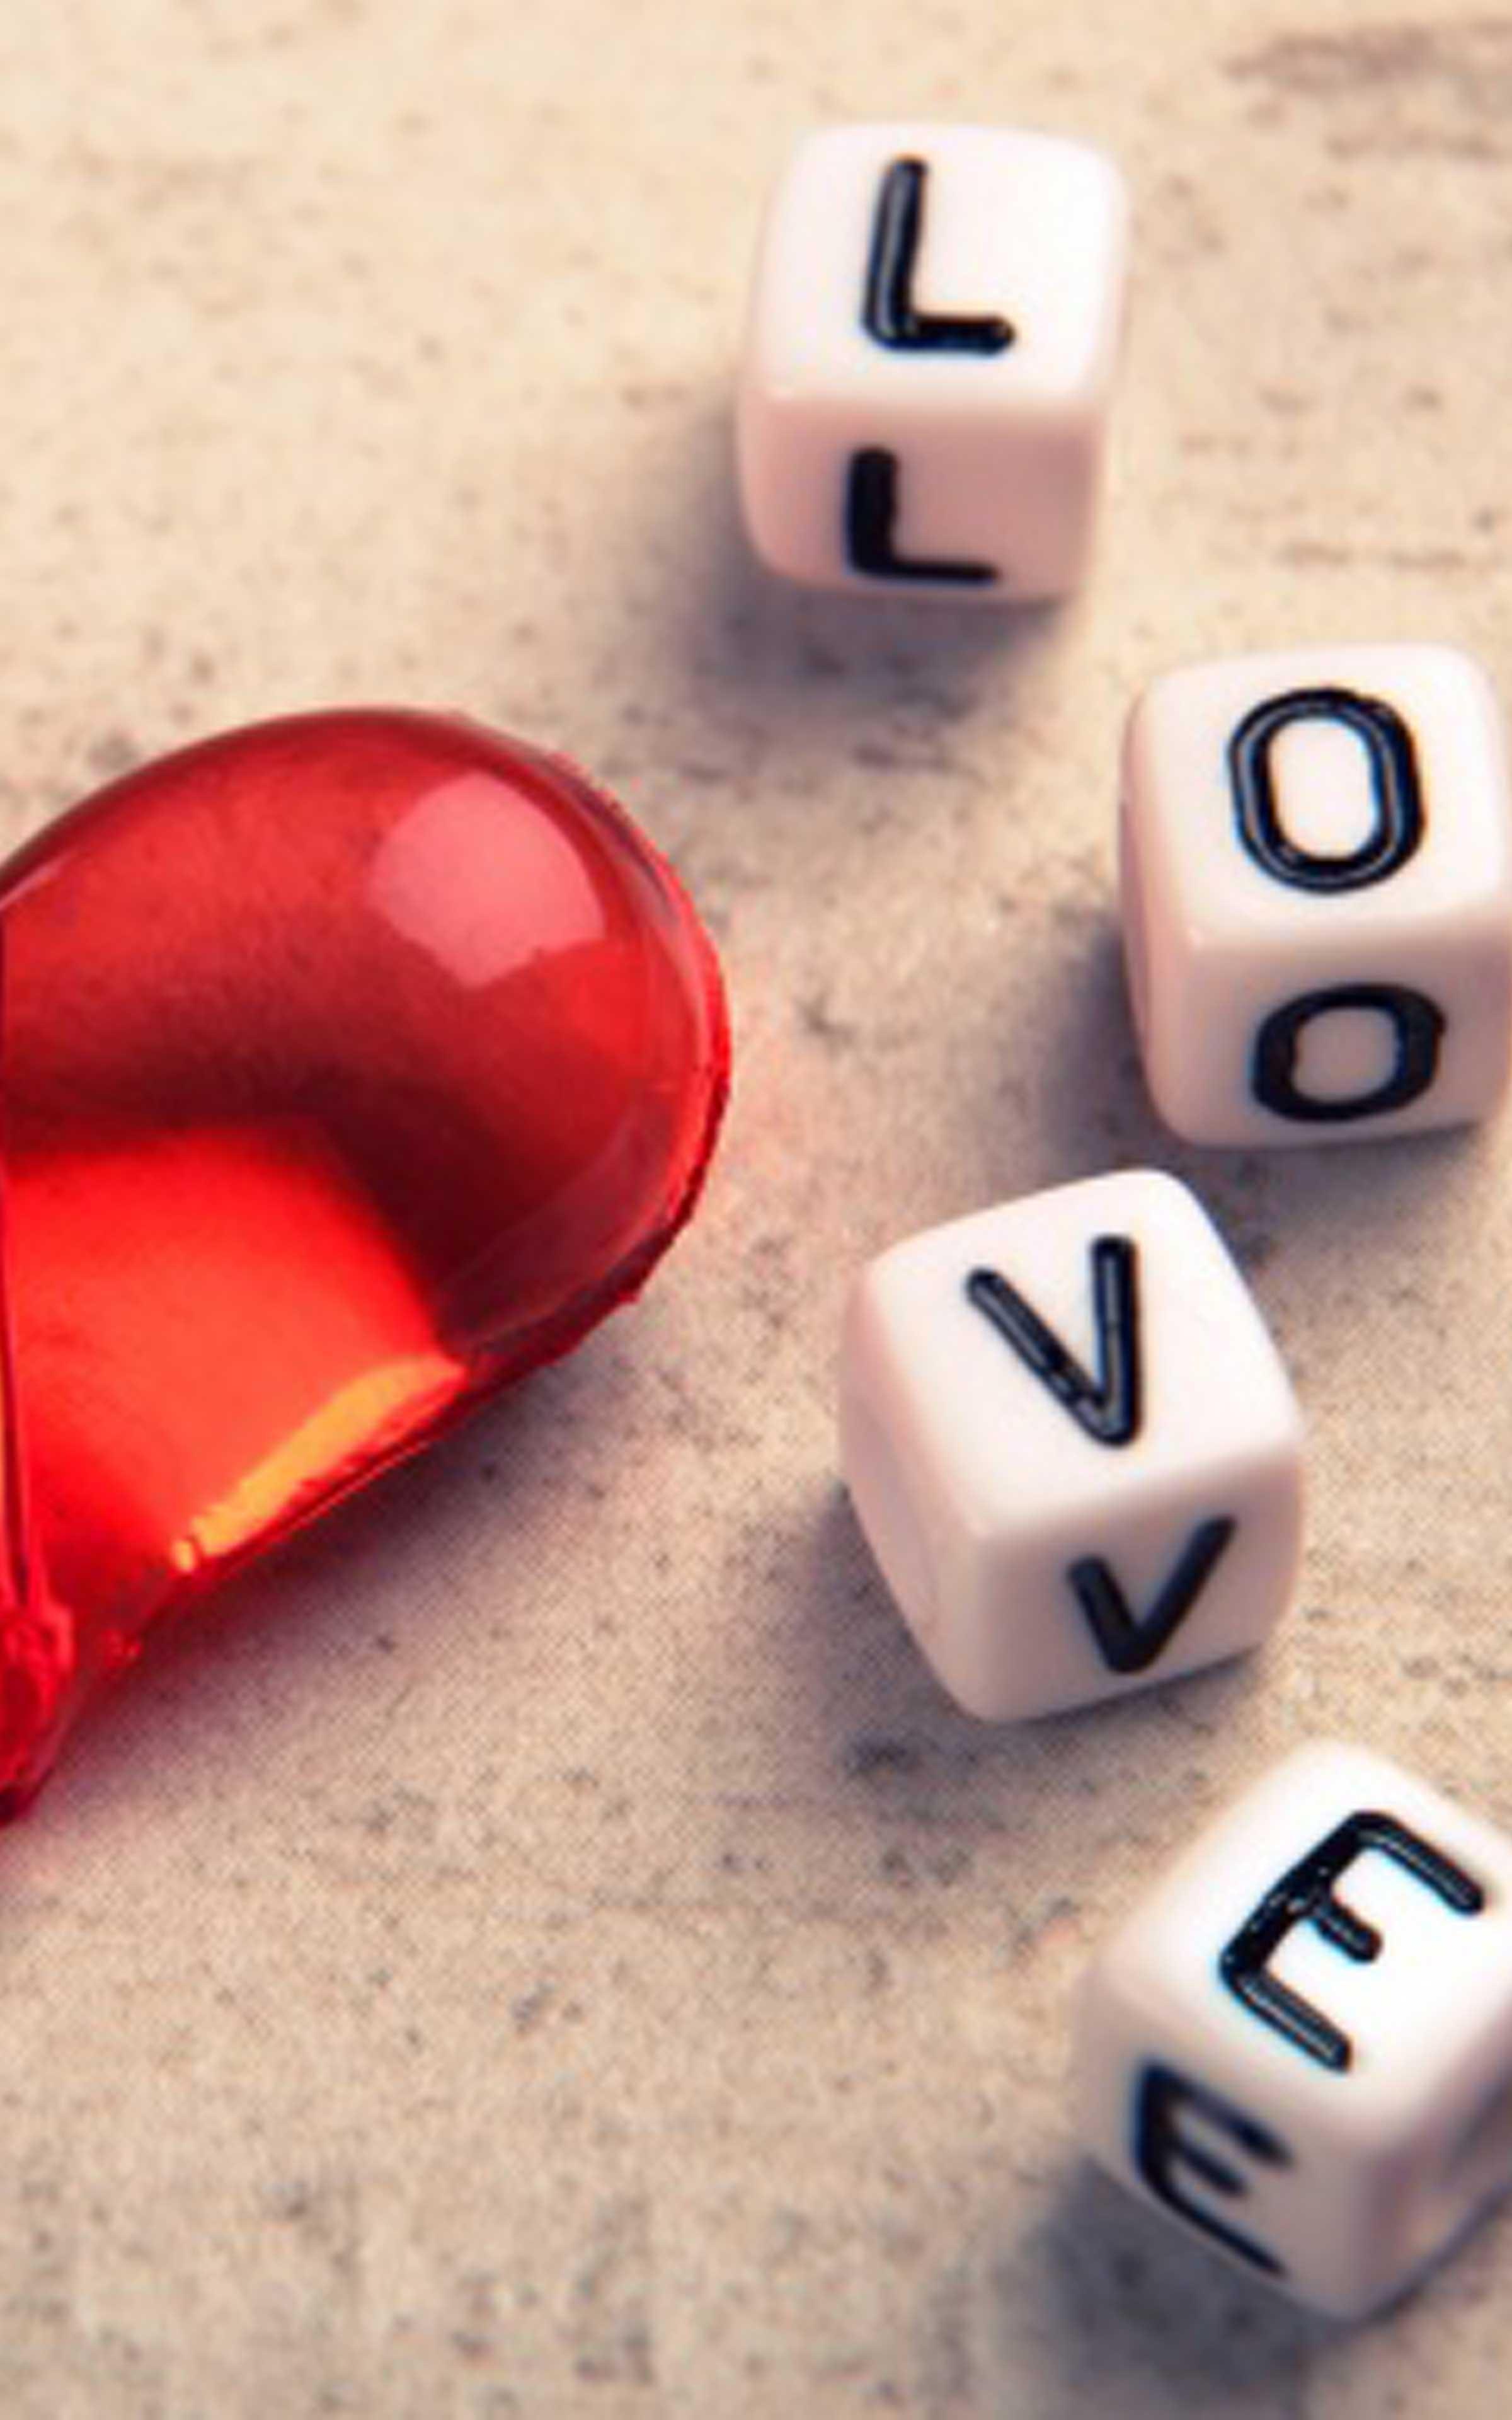 4K Love Wallpaper Full Screen - Download wallpapers of love,valentines